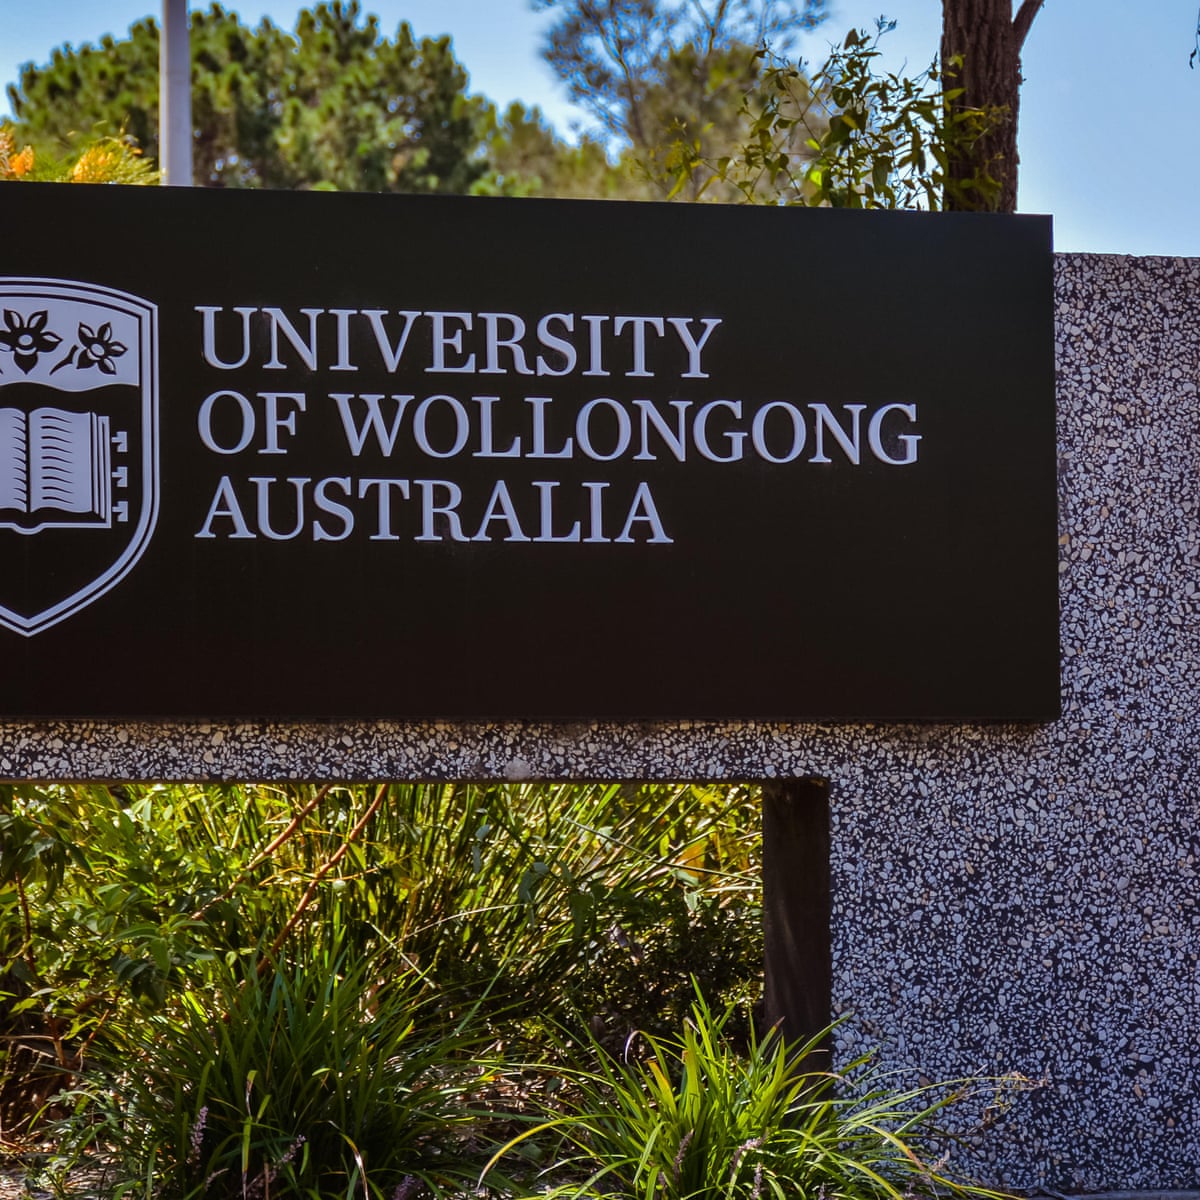 Wollongong University intervenes to approve Ramsay Centre western  civilisation degree | Australian universities | The Guardian